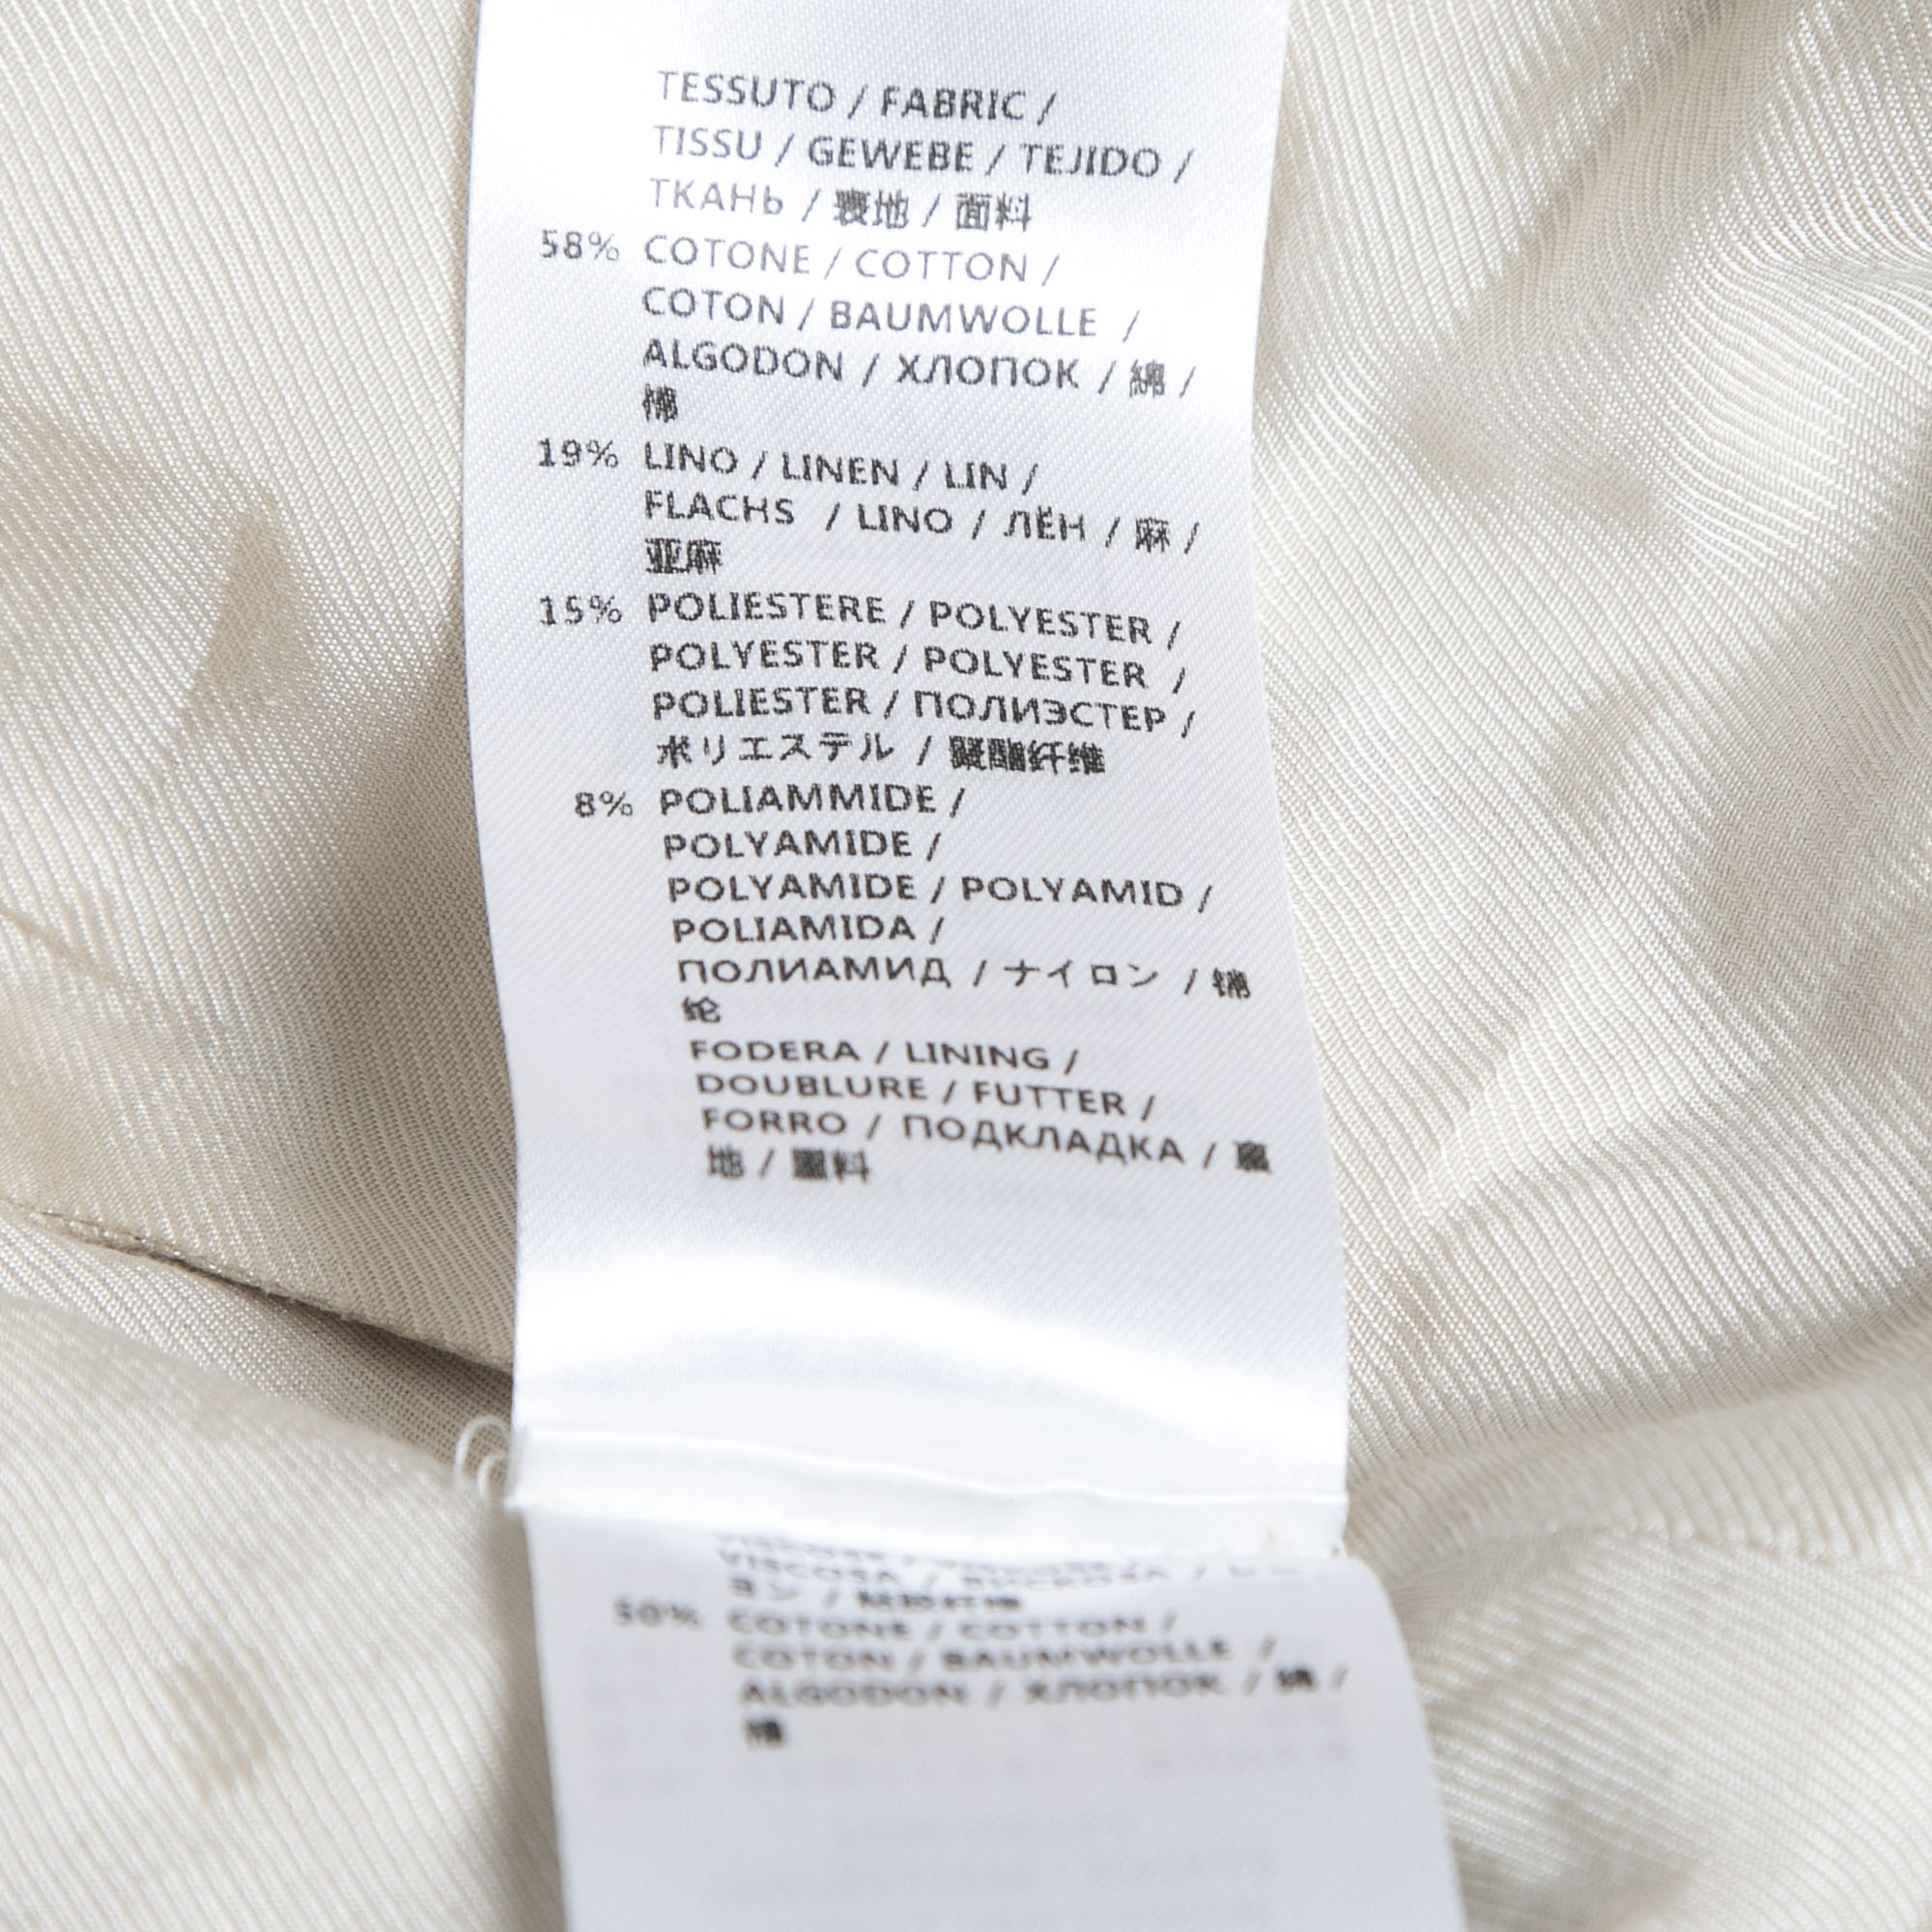 Stella McCartney Gold/White Paisley Brocade Mini Wrap Skirt XS